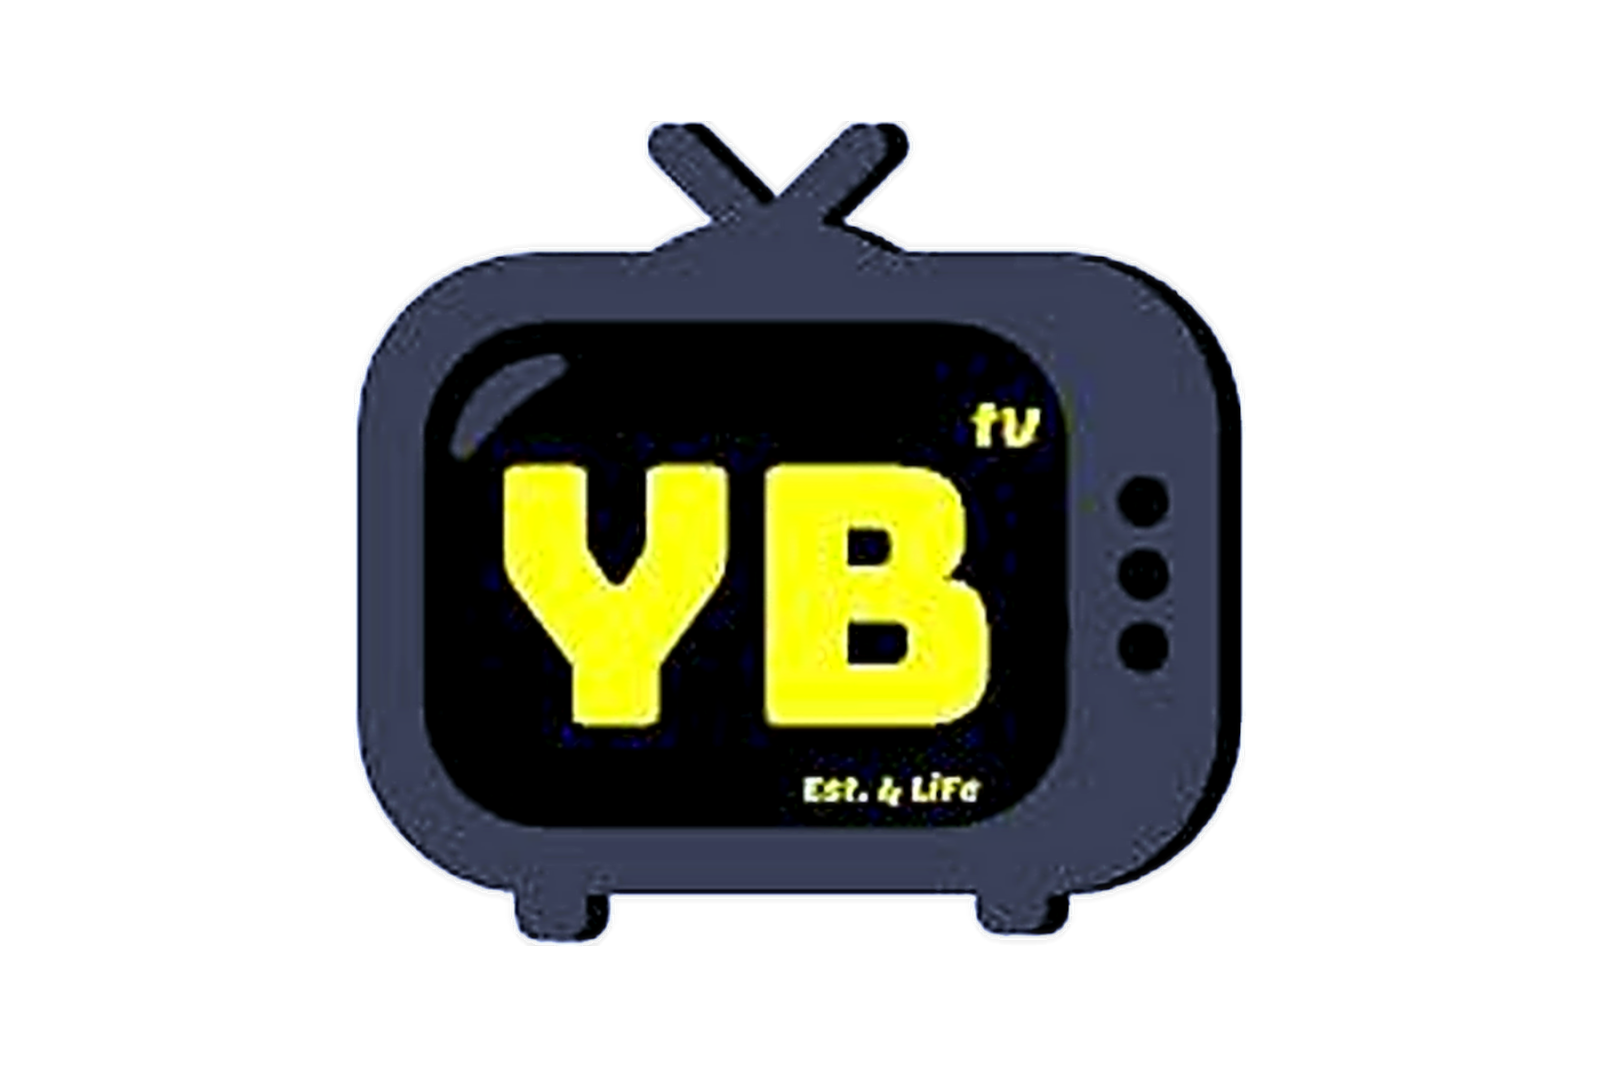 YBTV Network